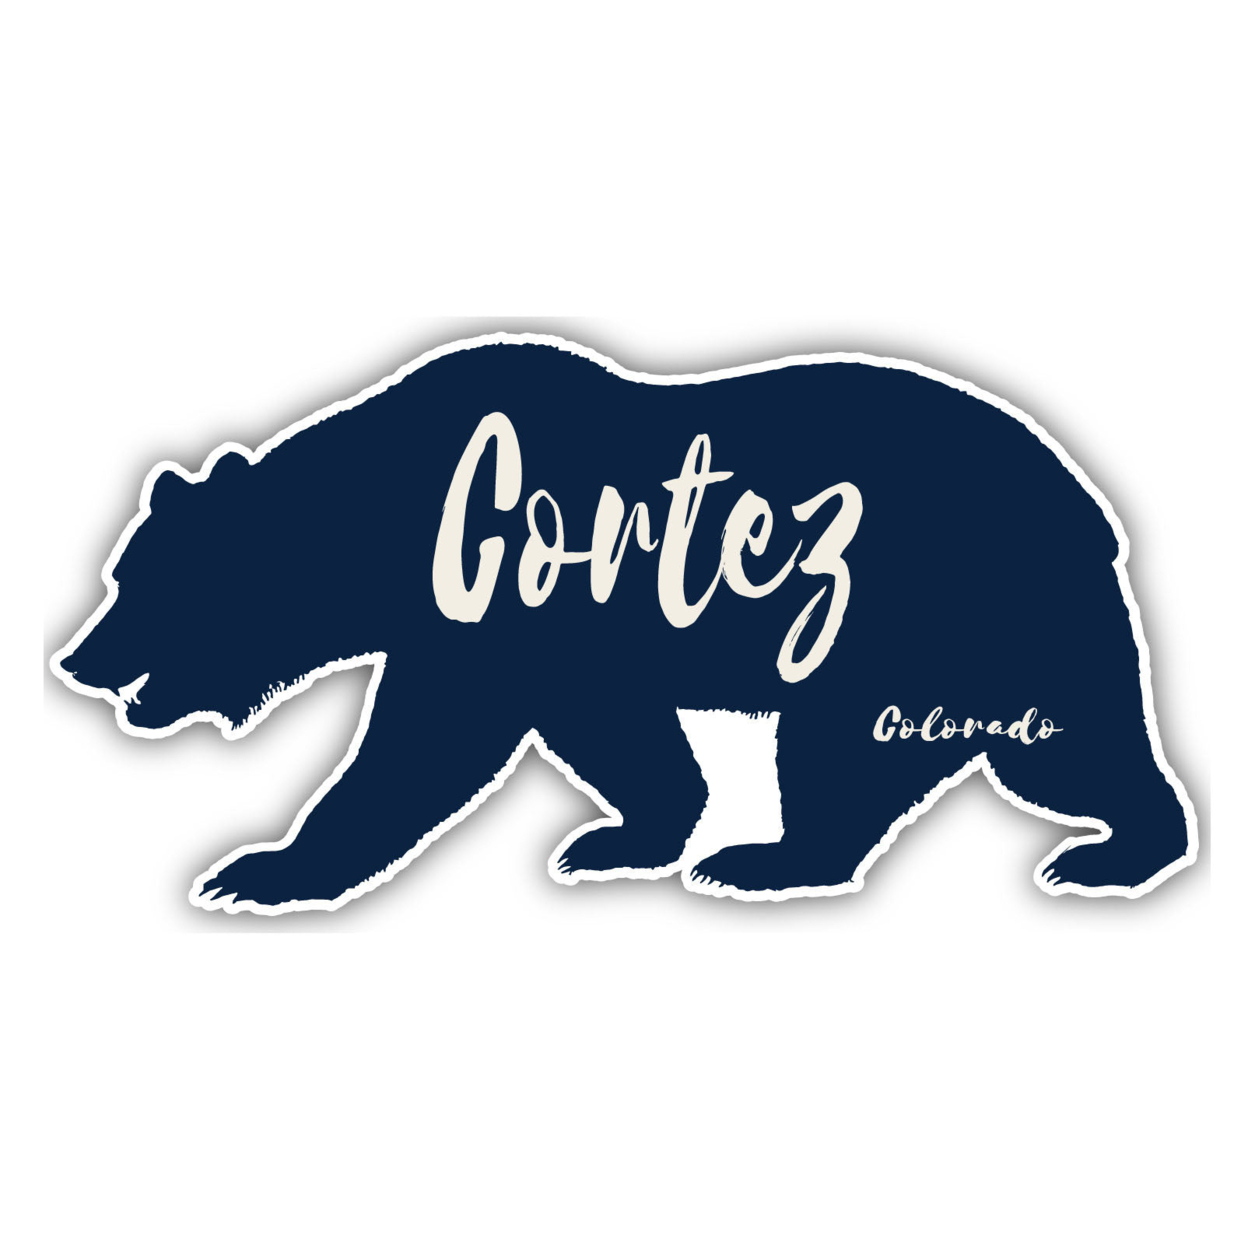 Cortez Colorado Souvenir Decorative Stickers (Choose Theme And Size) - Single Unit, 12-Inch, Bear